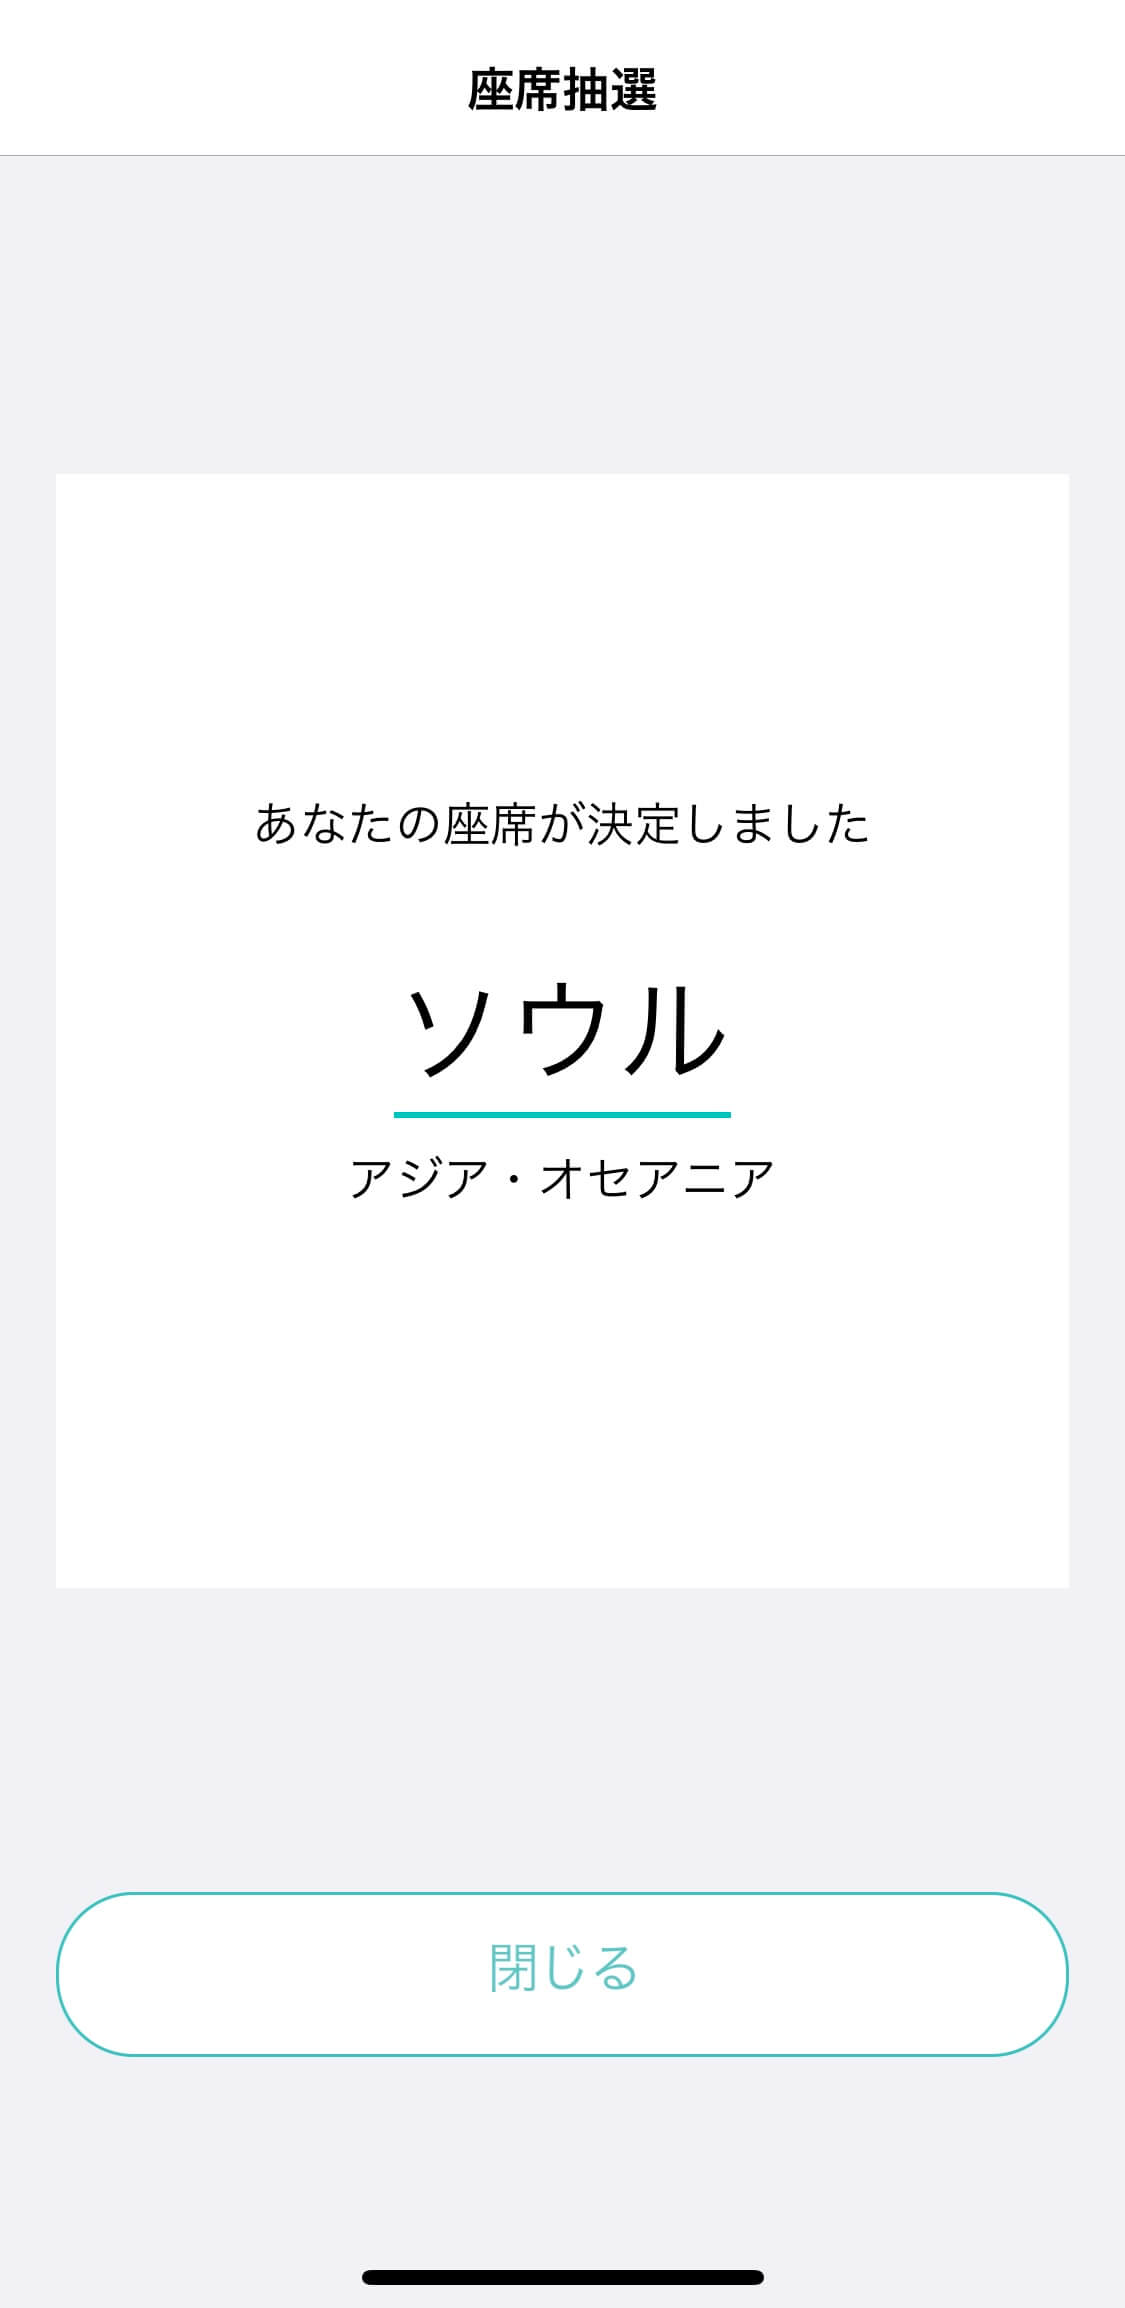 Mamoru Bizアプリ座席抽選のイメージ